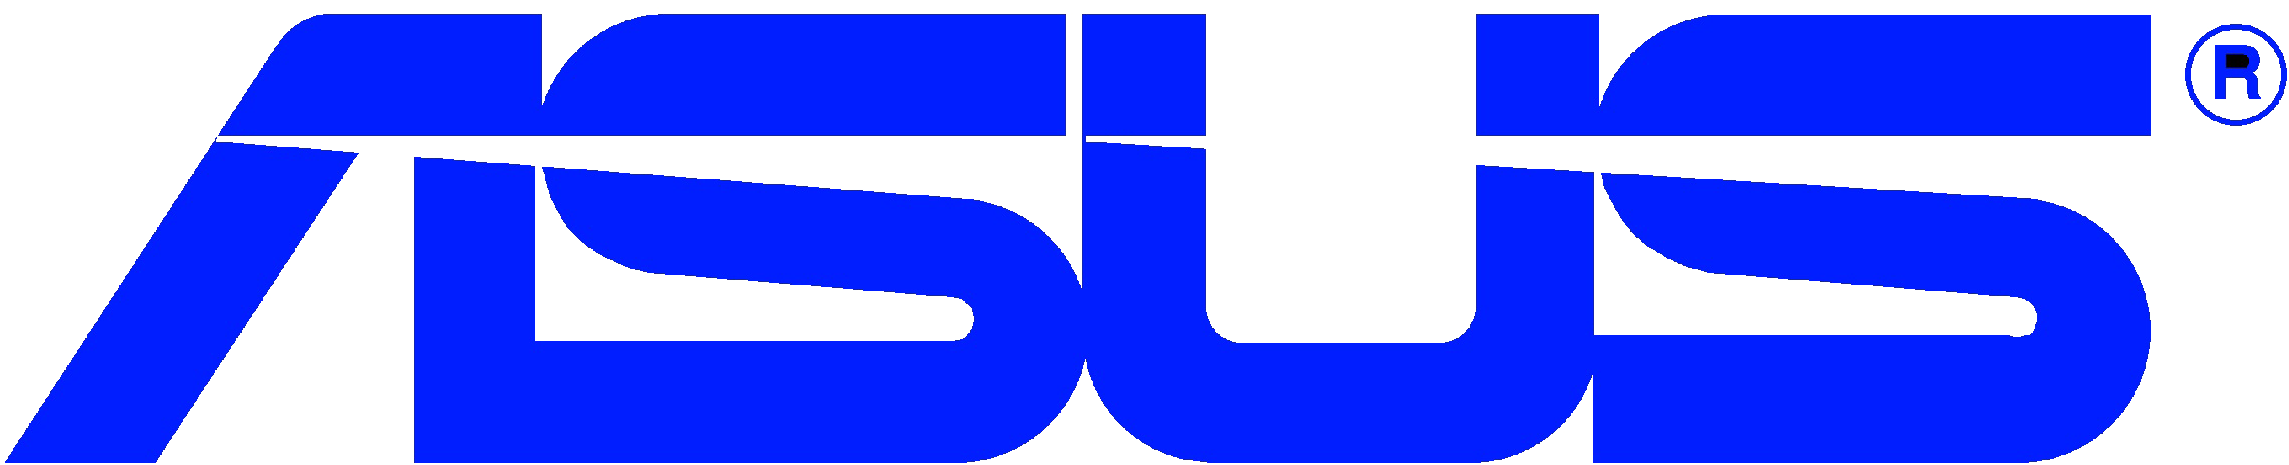 Asus Logo Transparent Image - Asus Wall Mount Kit - (2325x481) Png ...